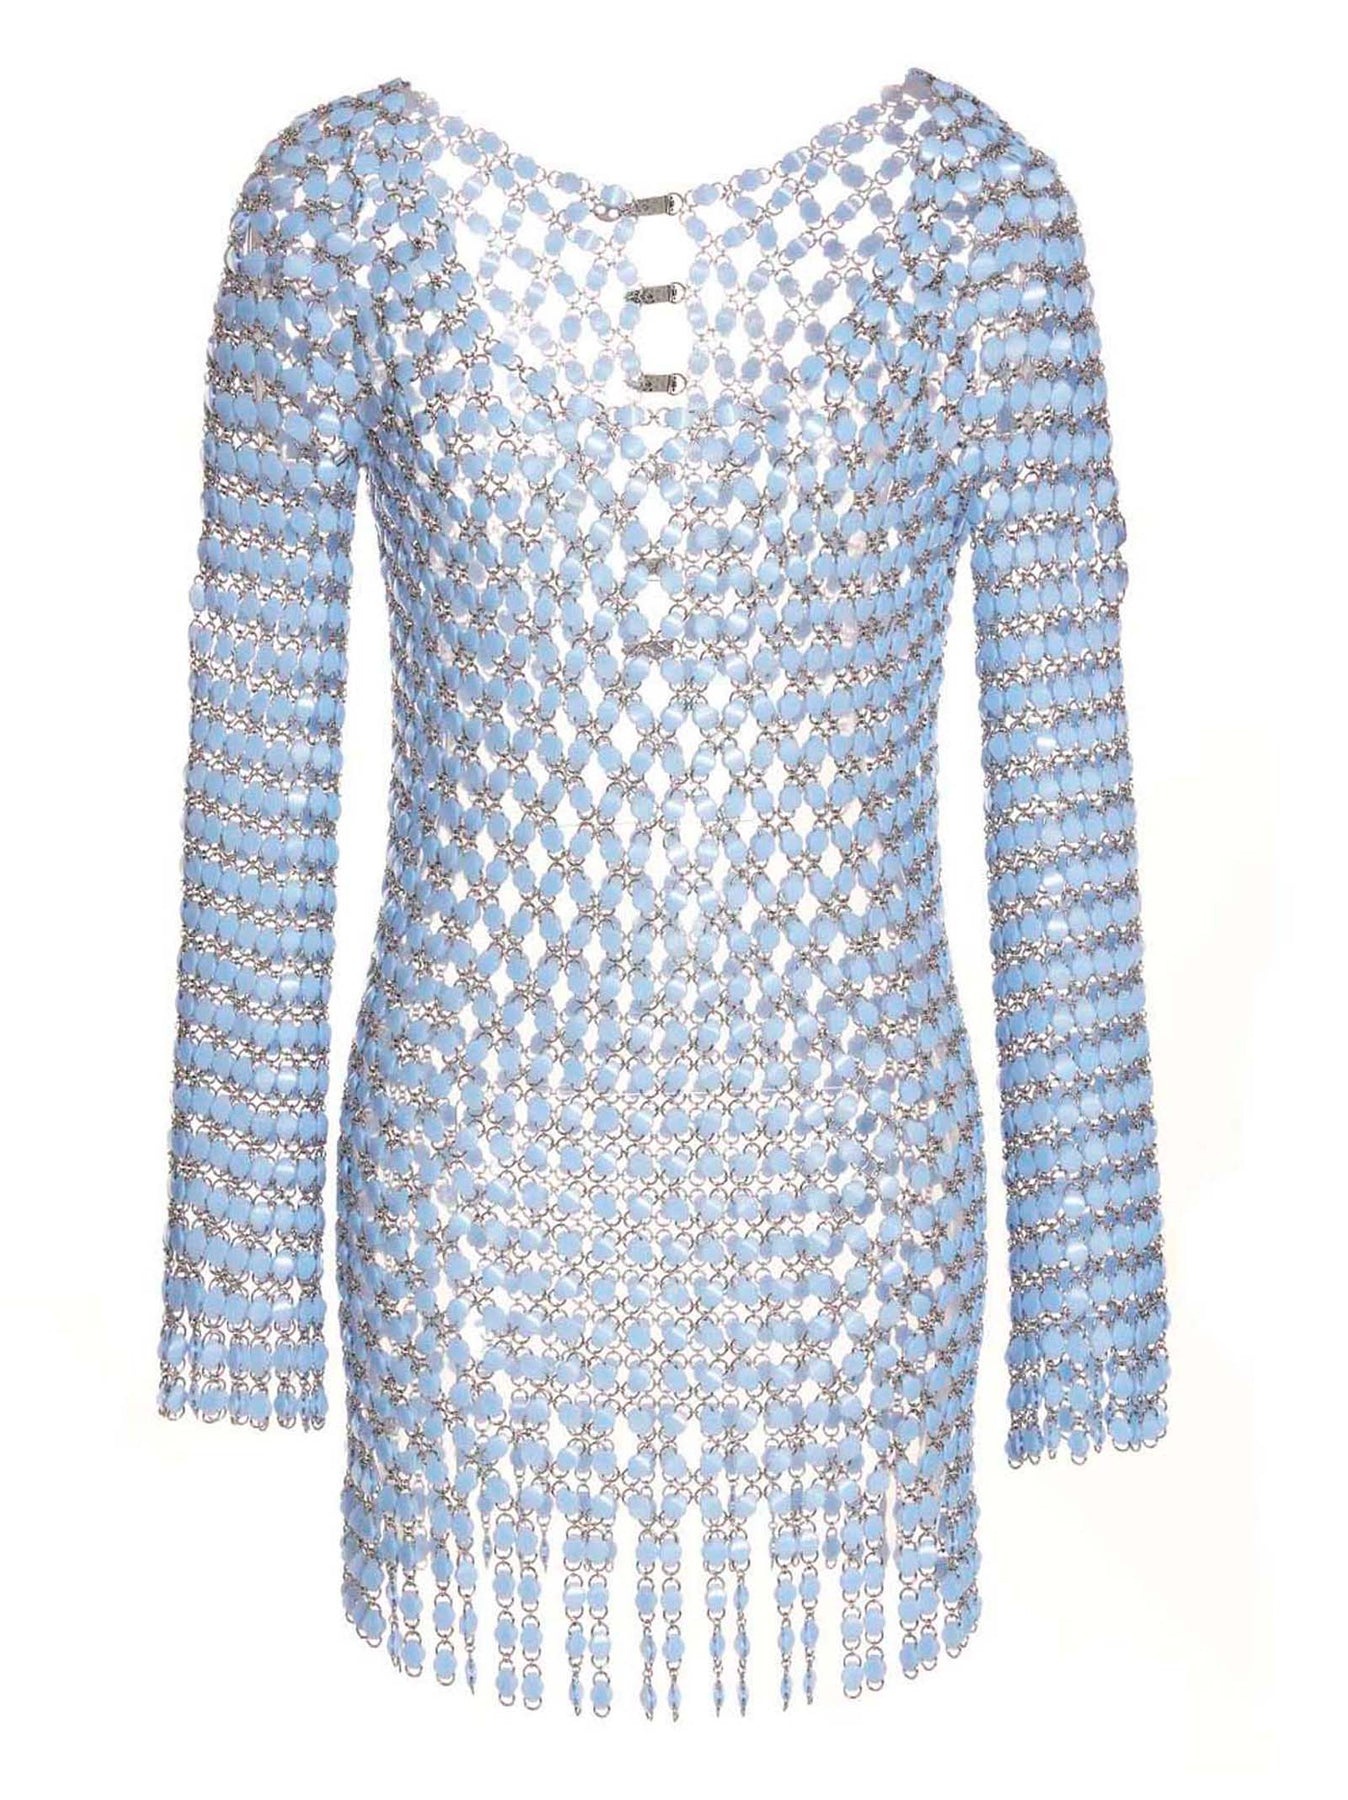 Acrylic knit dress - 1